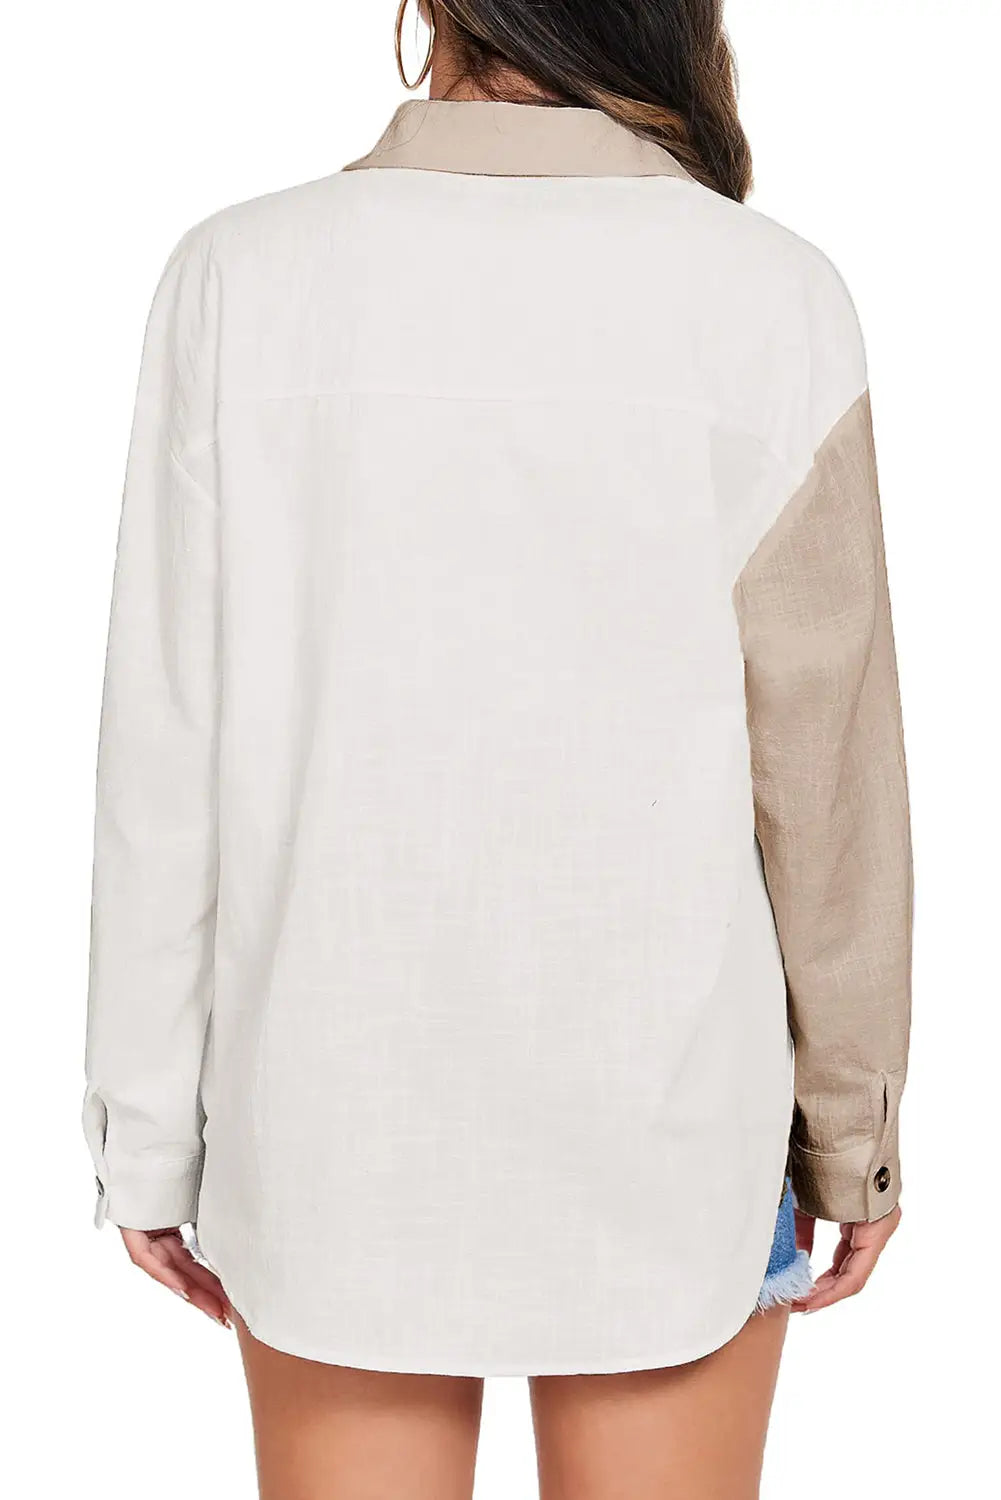 Khaki Colorblock Buttons Shirt-Collar Long Sleeve Pocket Blouse-1